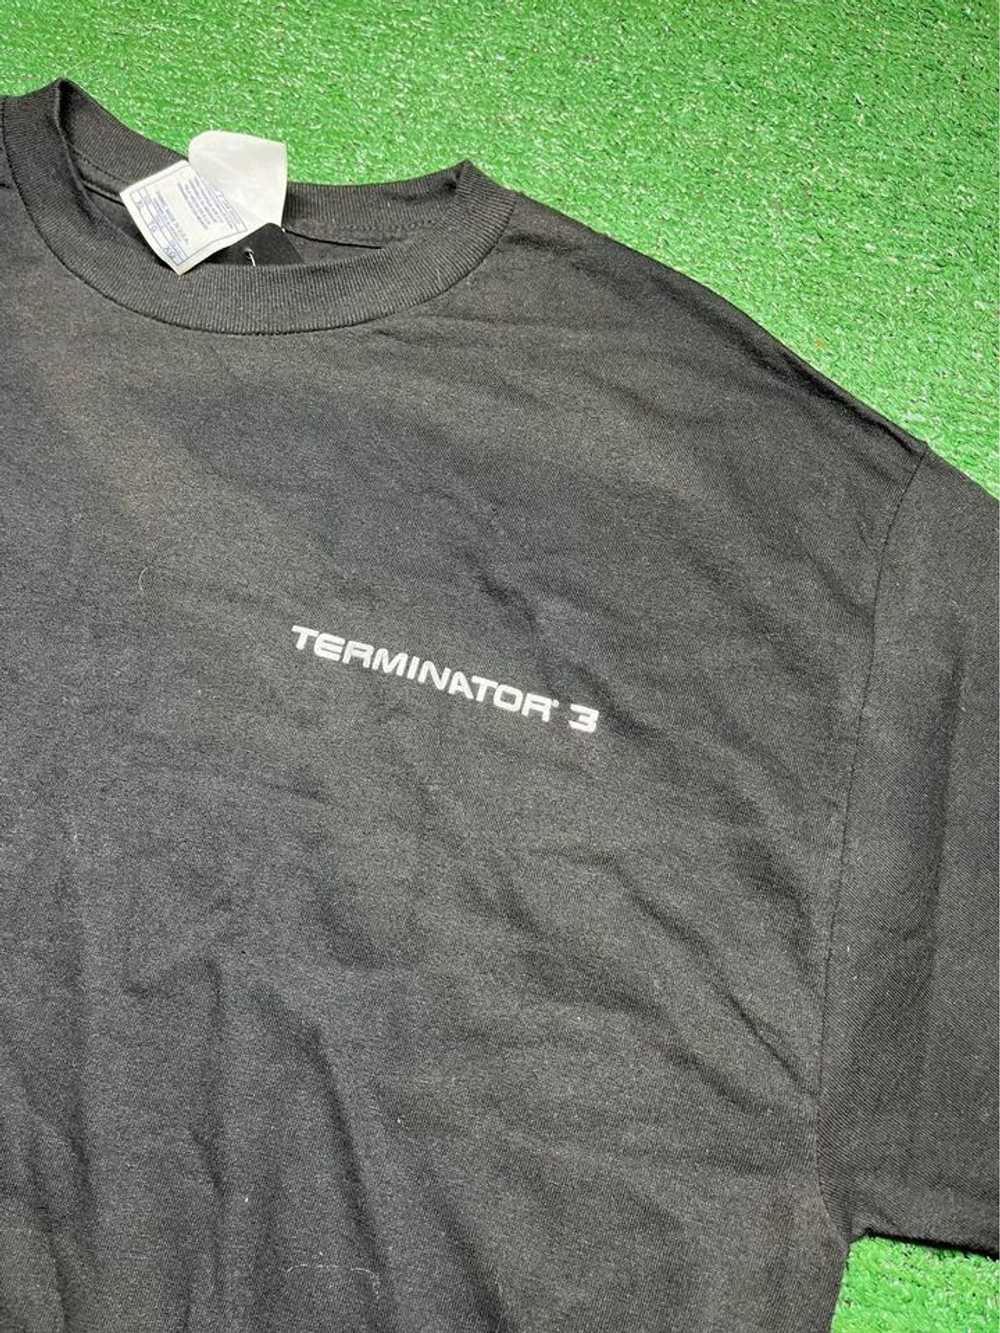 Vintage Vintage Terminator 3 T-shirt Size XL - image 2